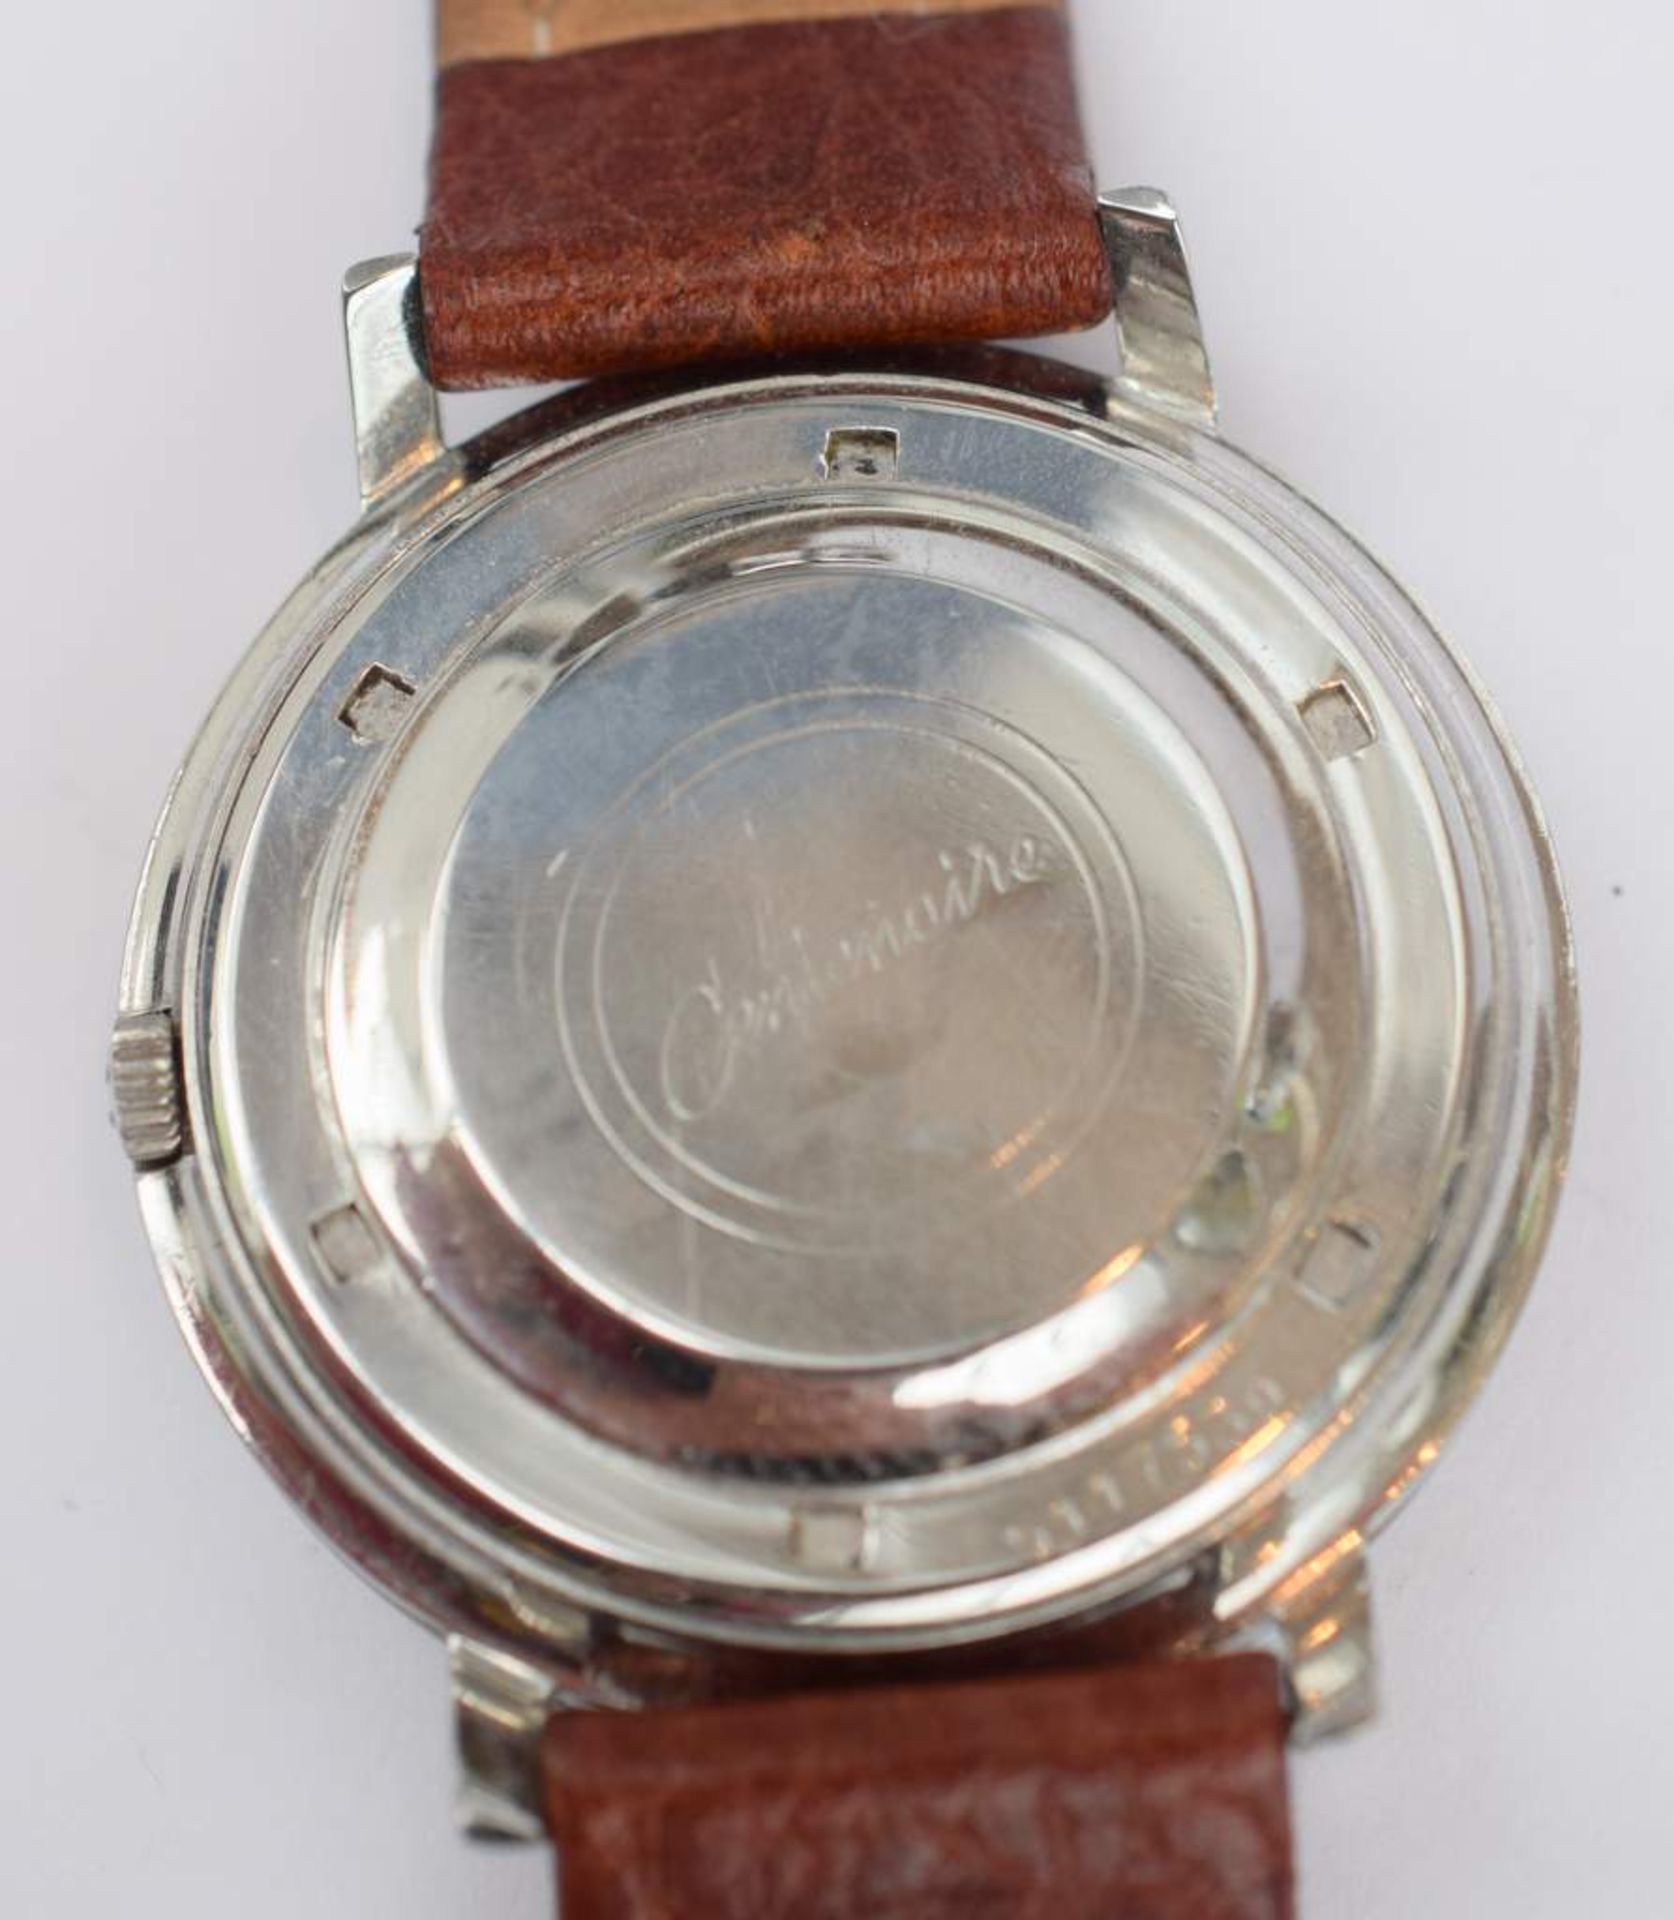 Eterna-Matic Centenaire 61 Gentleman's Automatic Wristwatch - Image 5 of 7